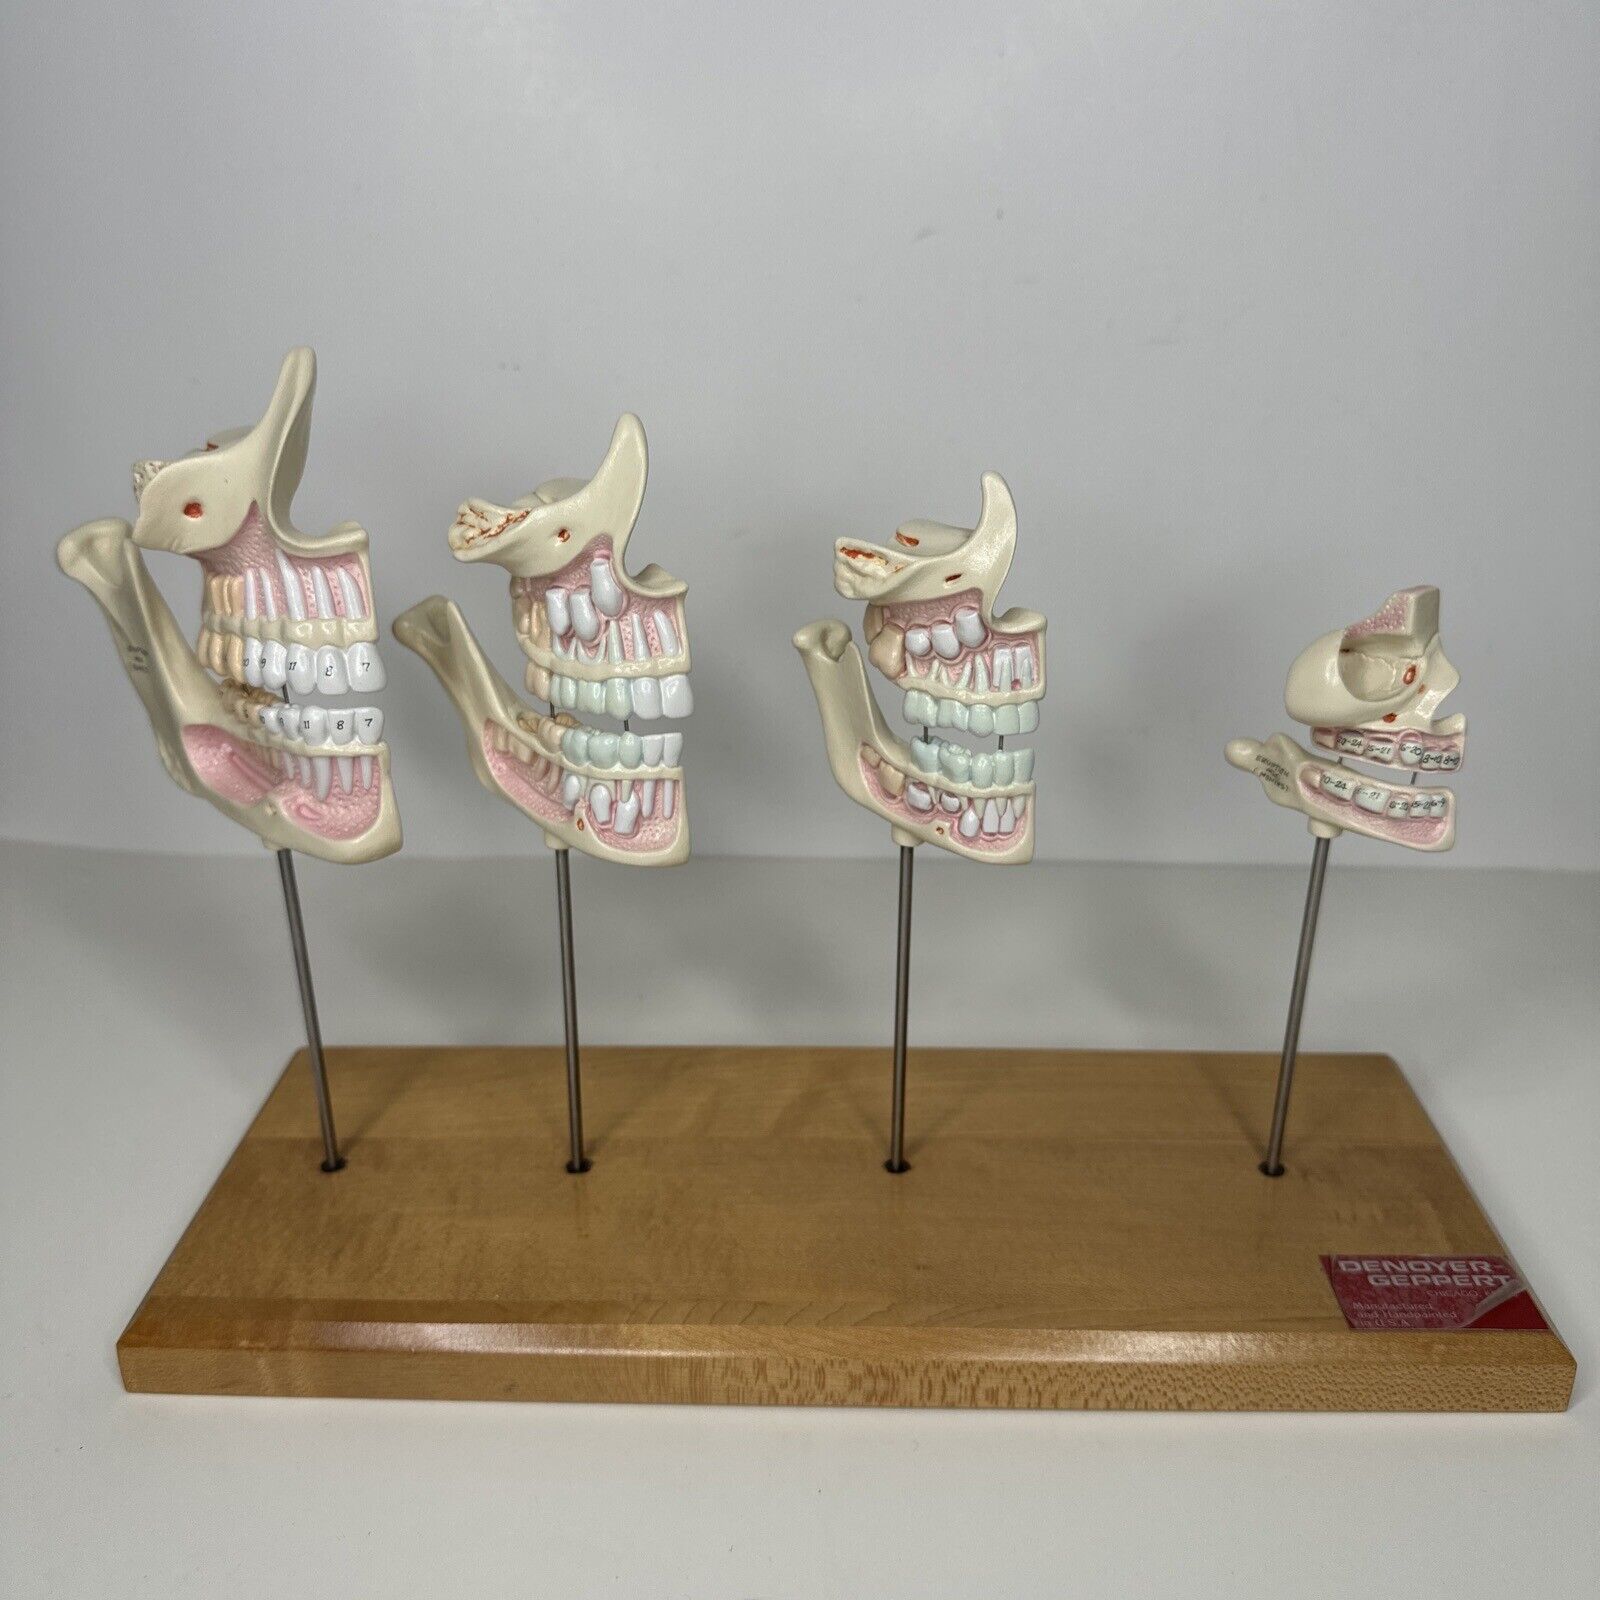 Vintage Denoyer-Geppert Teeth & Jaw Development Stages Model Anatomical Display